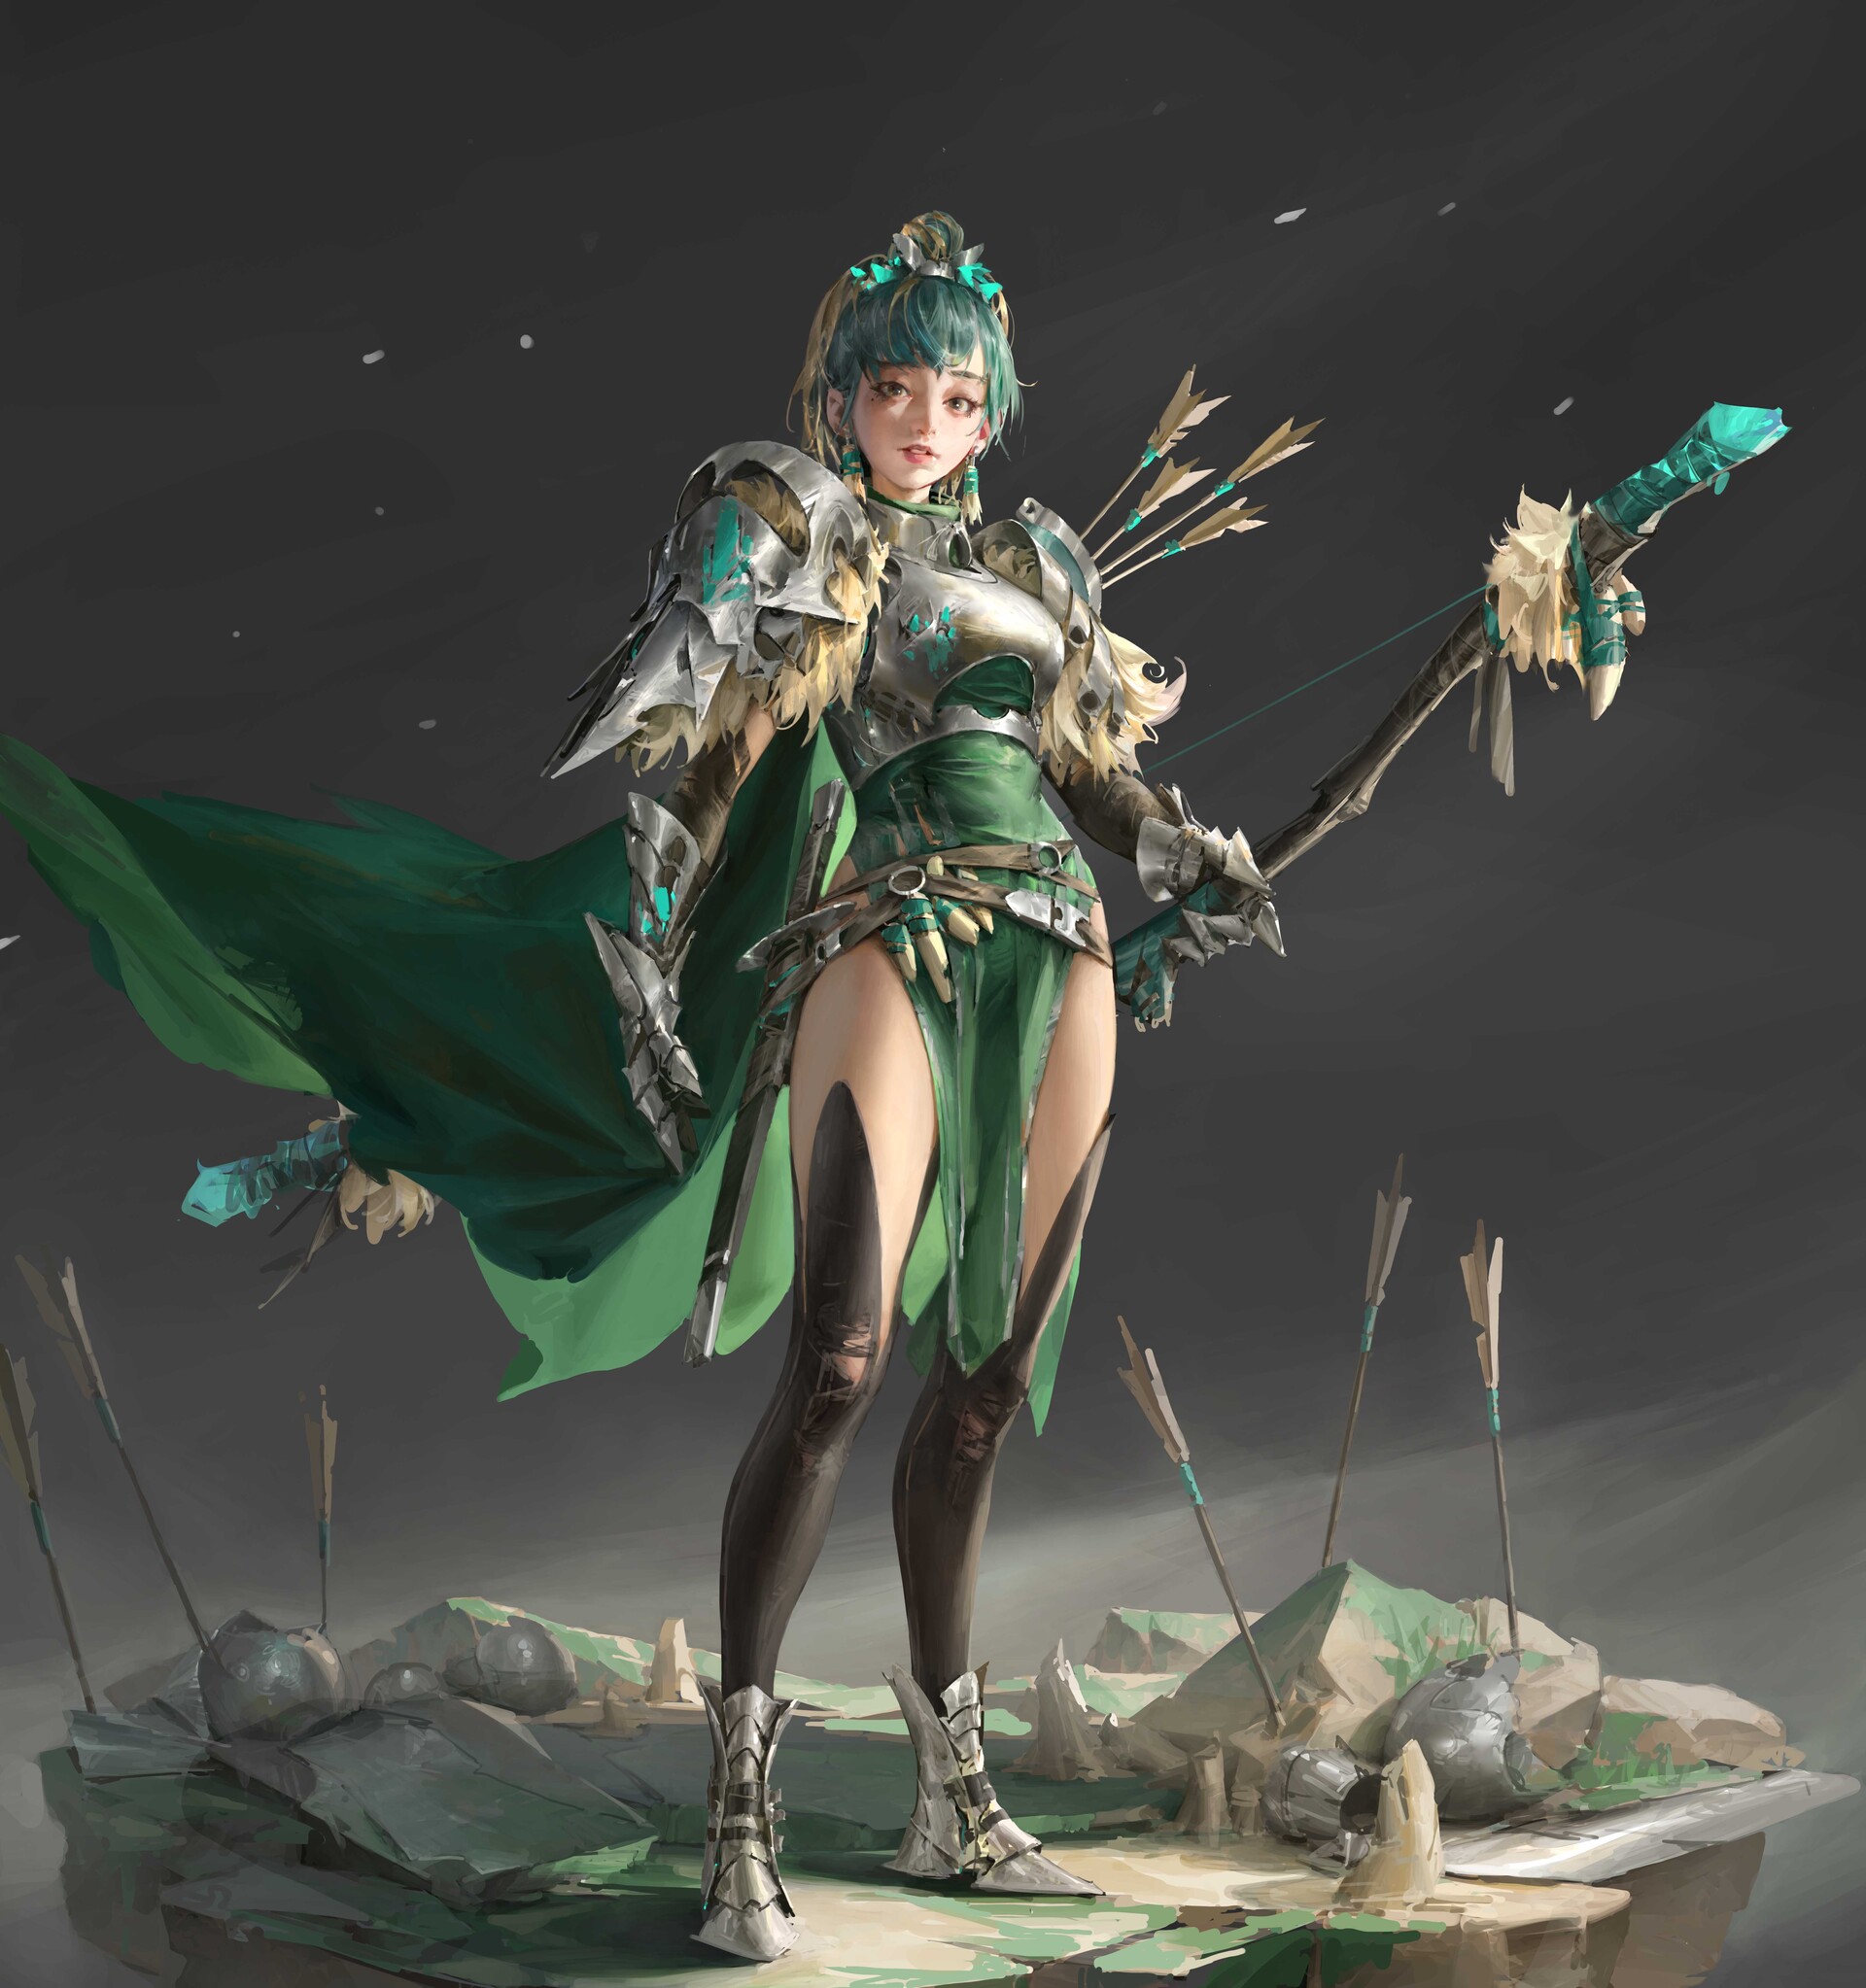 General 1920x2046 artwork fantasy art fantasy girl green clothing digital art thighs fantasy armor armor green hair bow and arrow